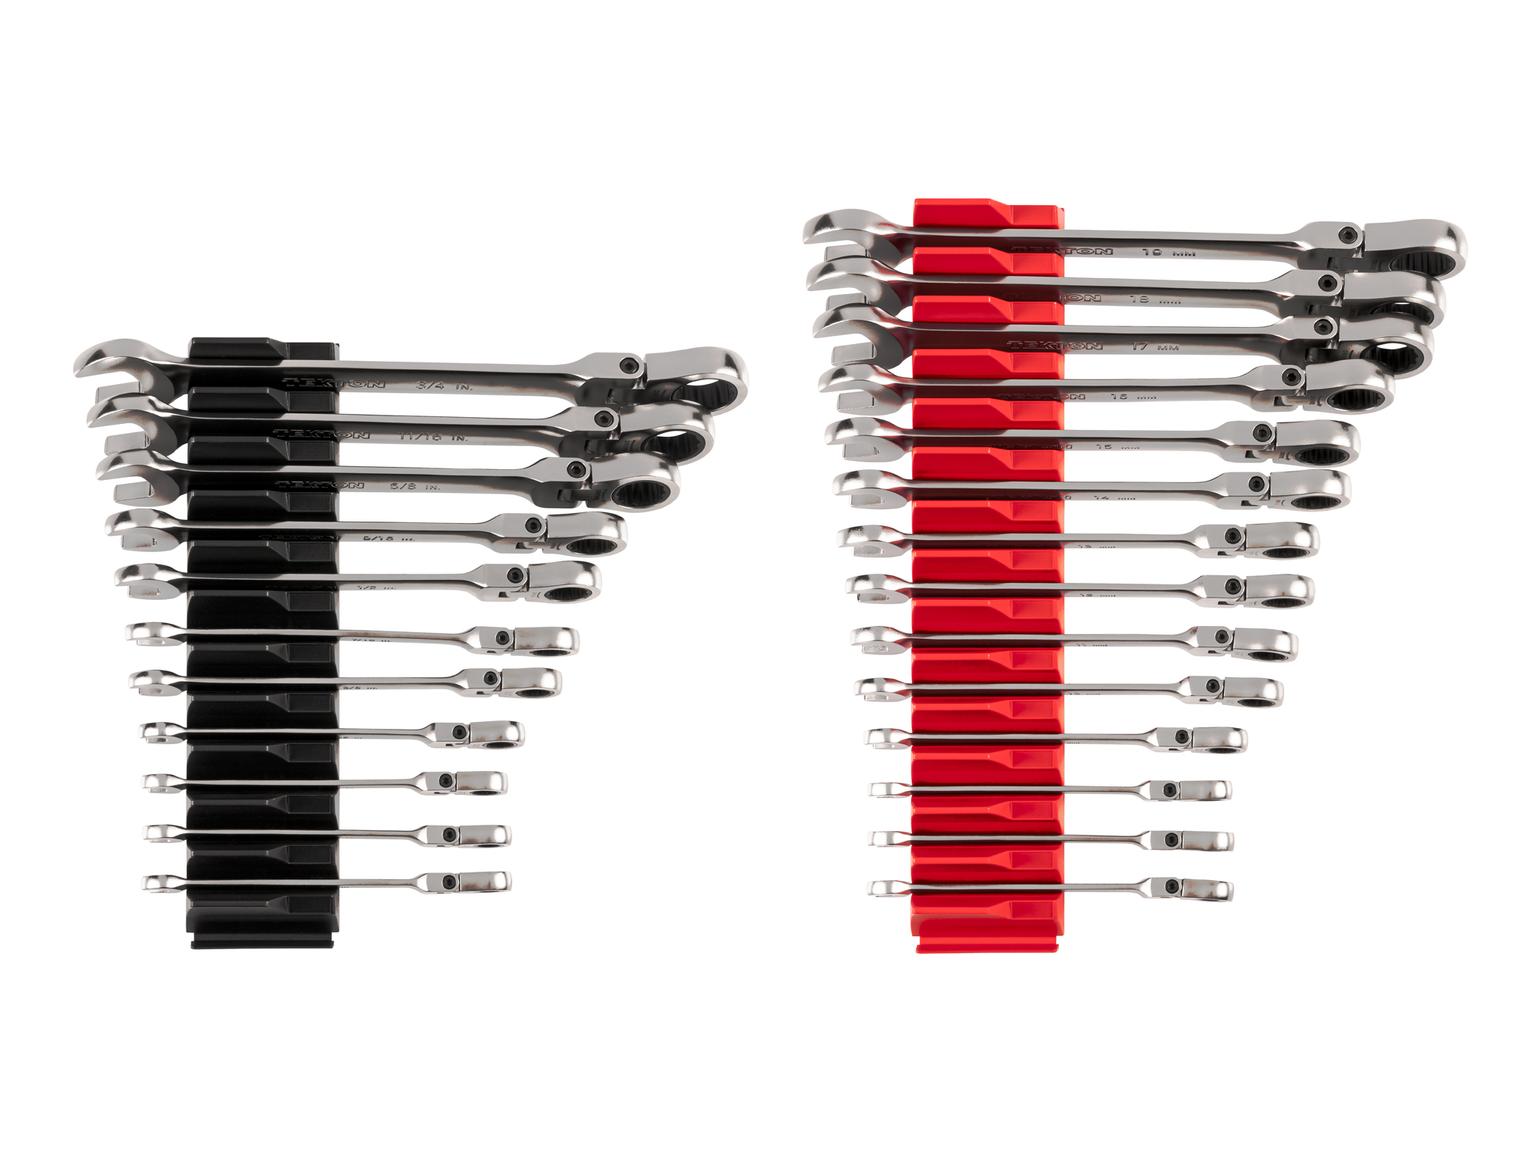 Flex Head 12-Point Ratcheting Combination Wrench Set, 25-Piece (Modular Wrench Organizer)